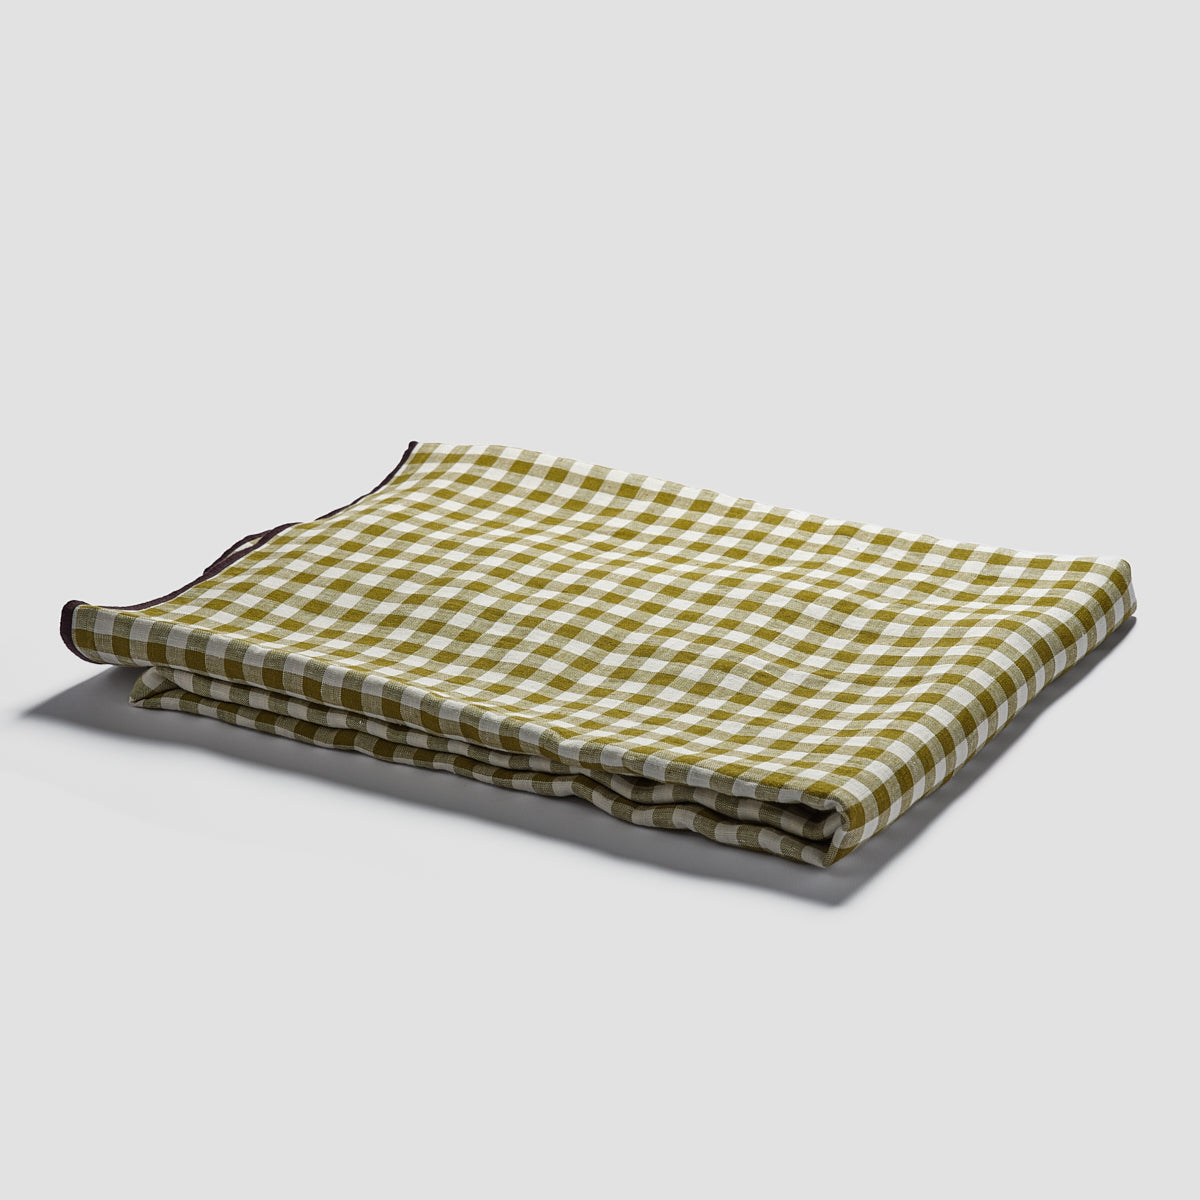 Botanical Green Gingham Linen Tablecloth - Piglet in Bed